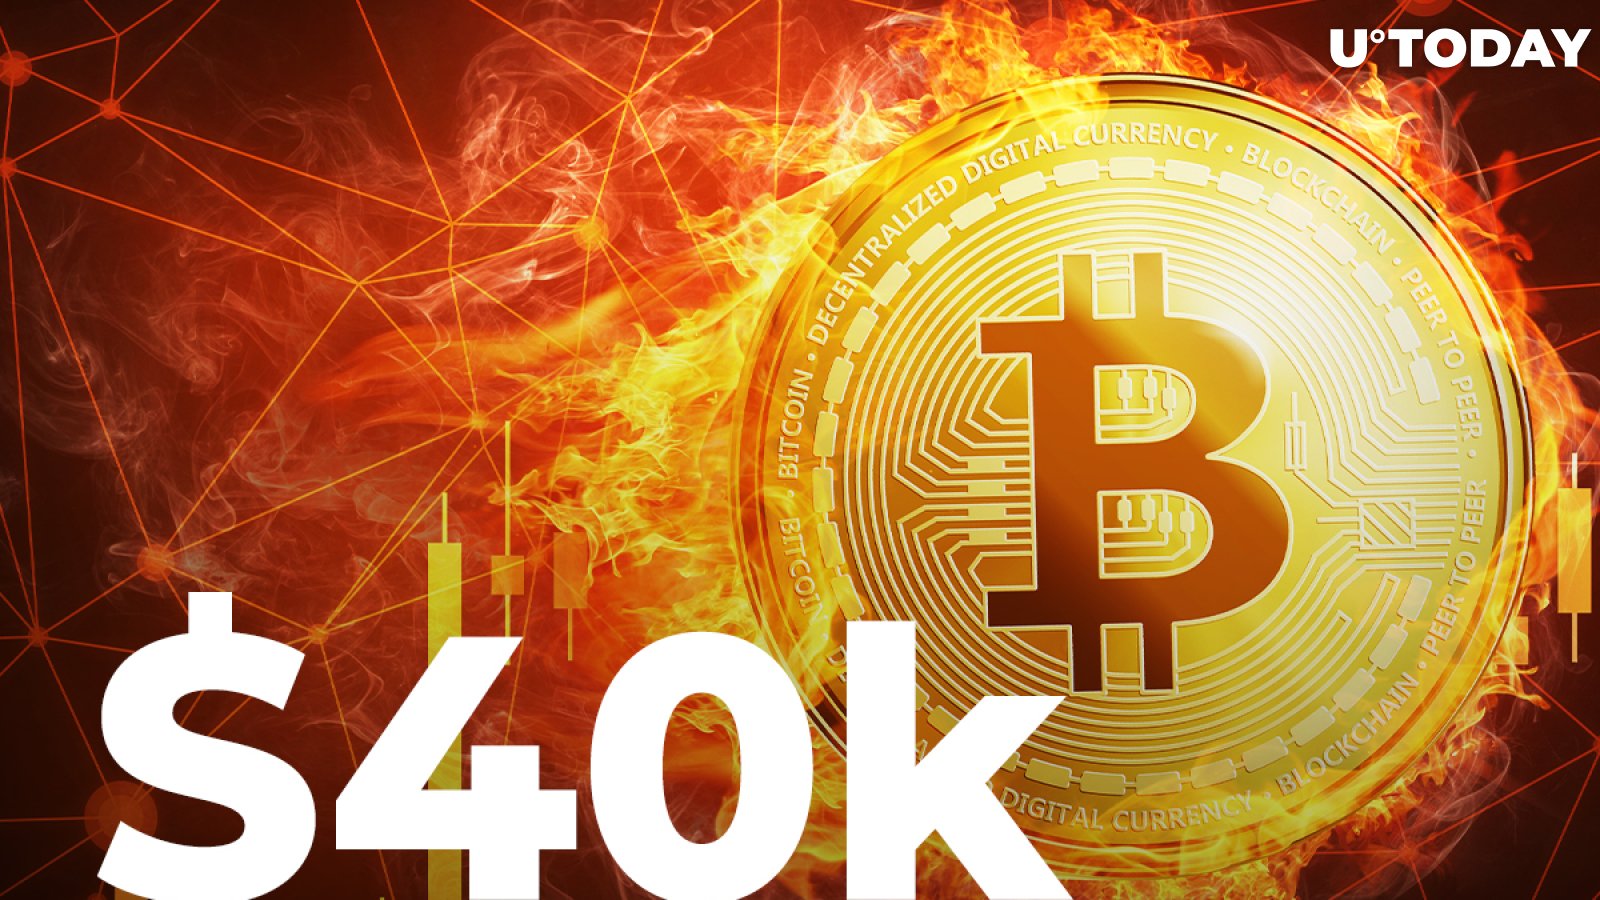 BREAKING: Bitcoin Hits $40,000 Again After Short-Lasting Correction